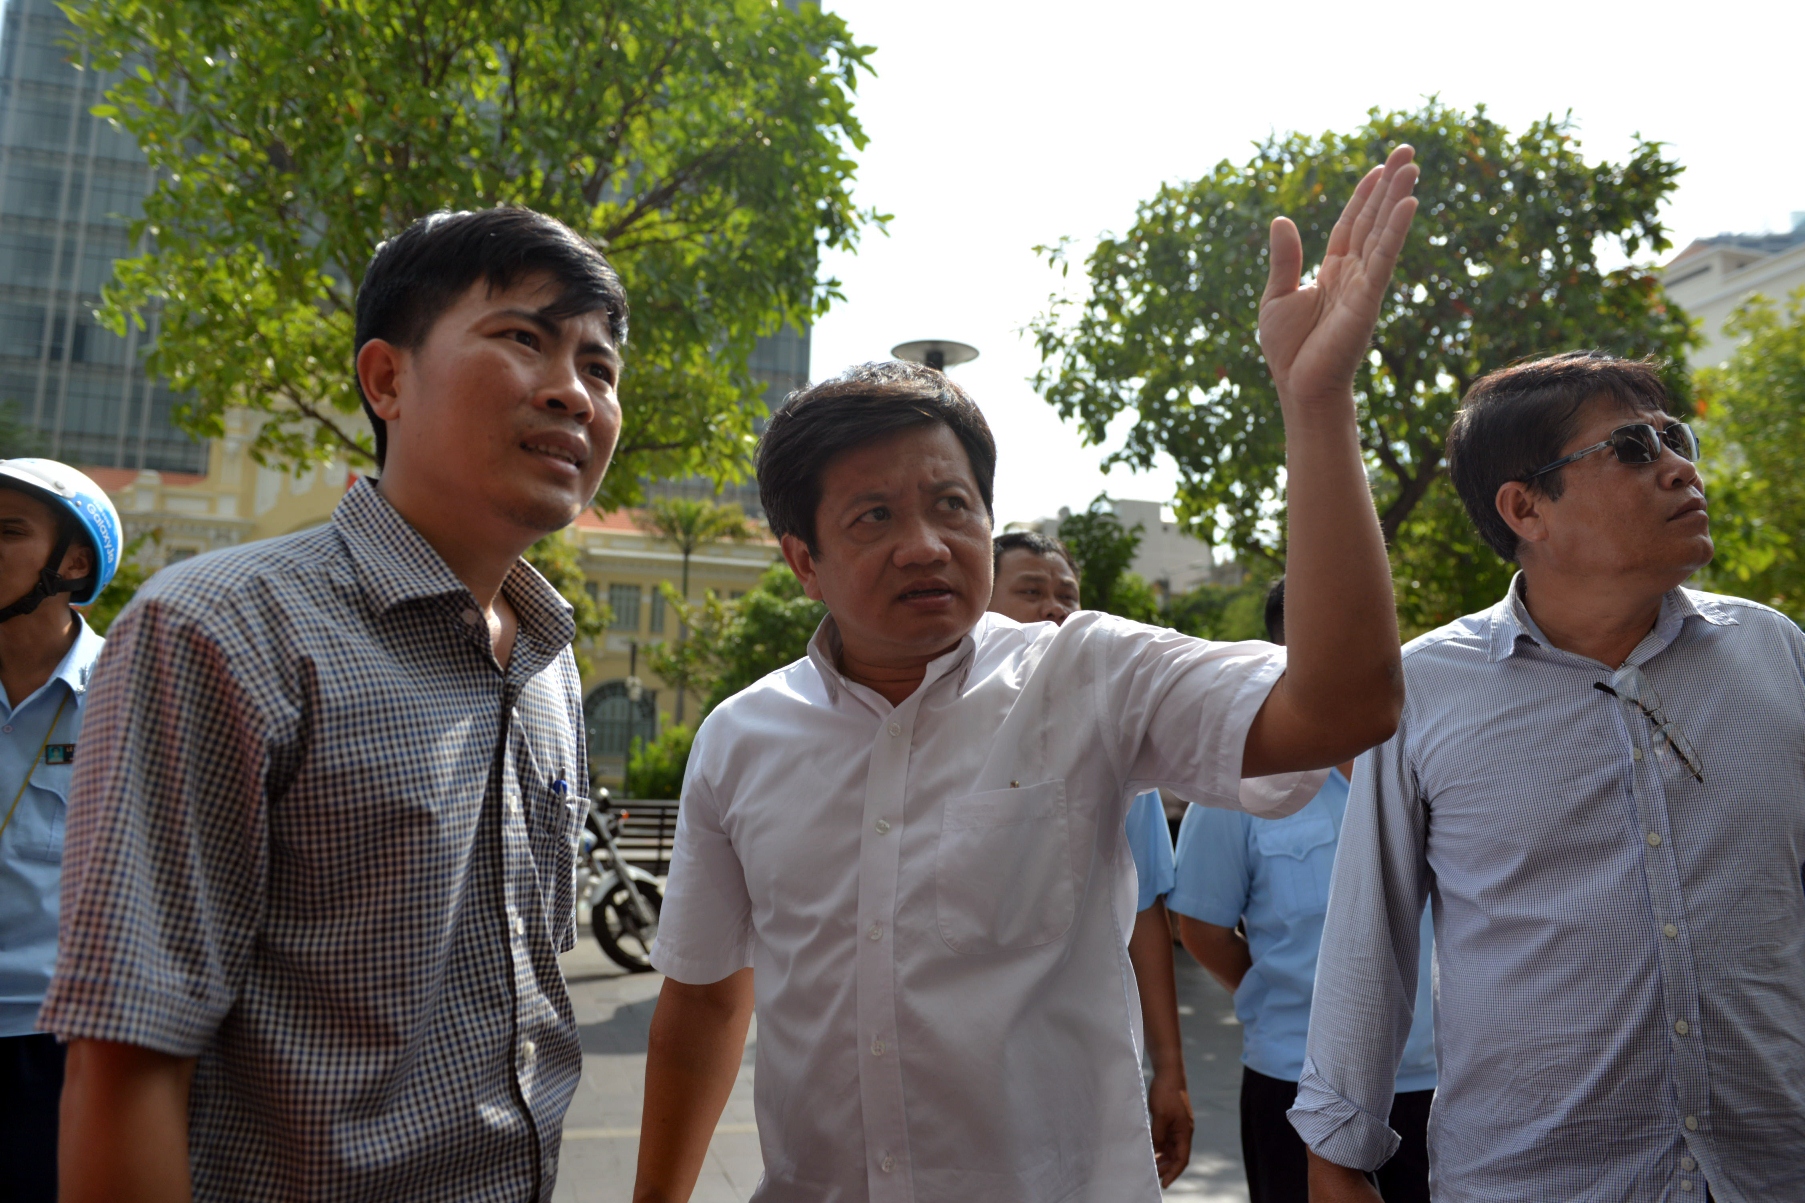 Doan Ngoc Hai receives death threat over tough stance on Saigon sidewalks